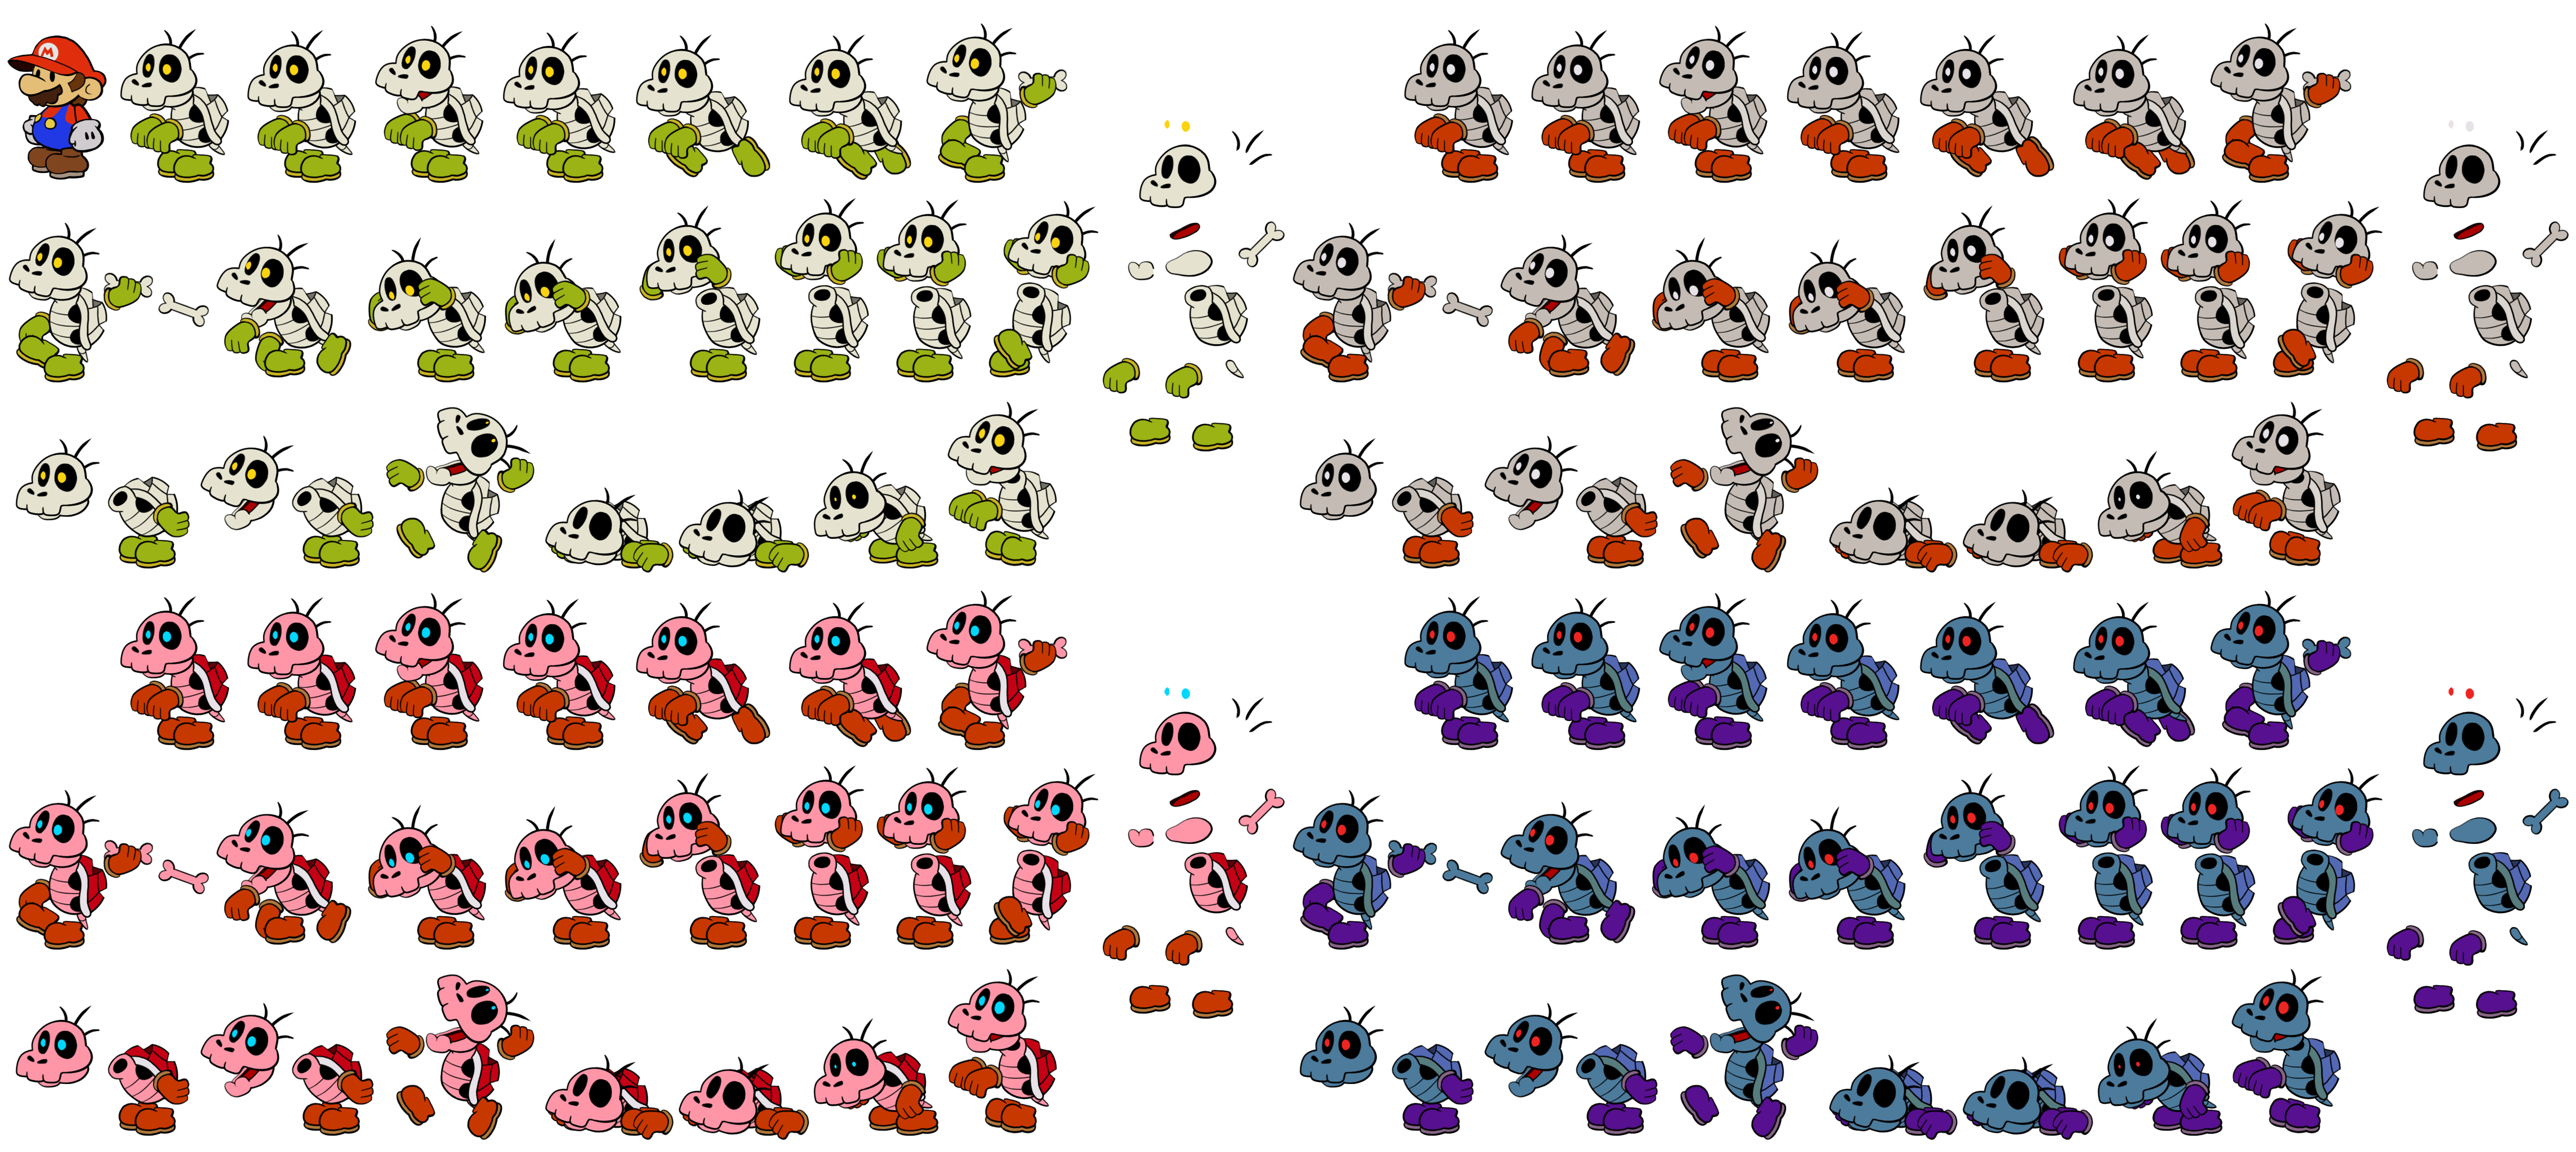 Mario Customs - Dry Bones (Paper Mario-Style)